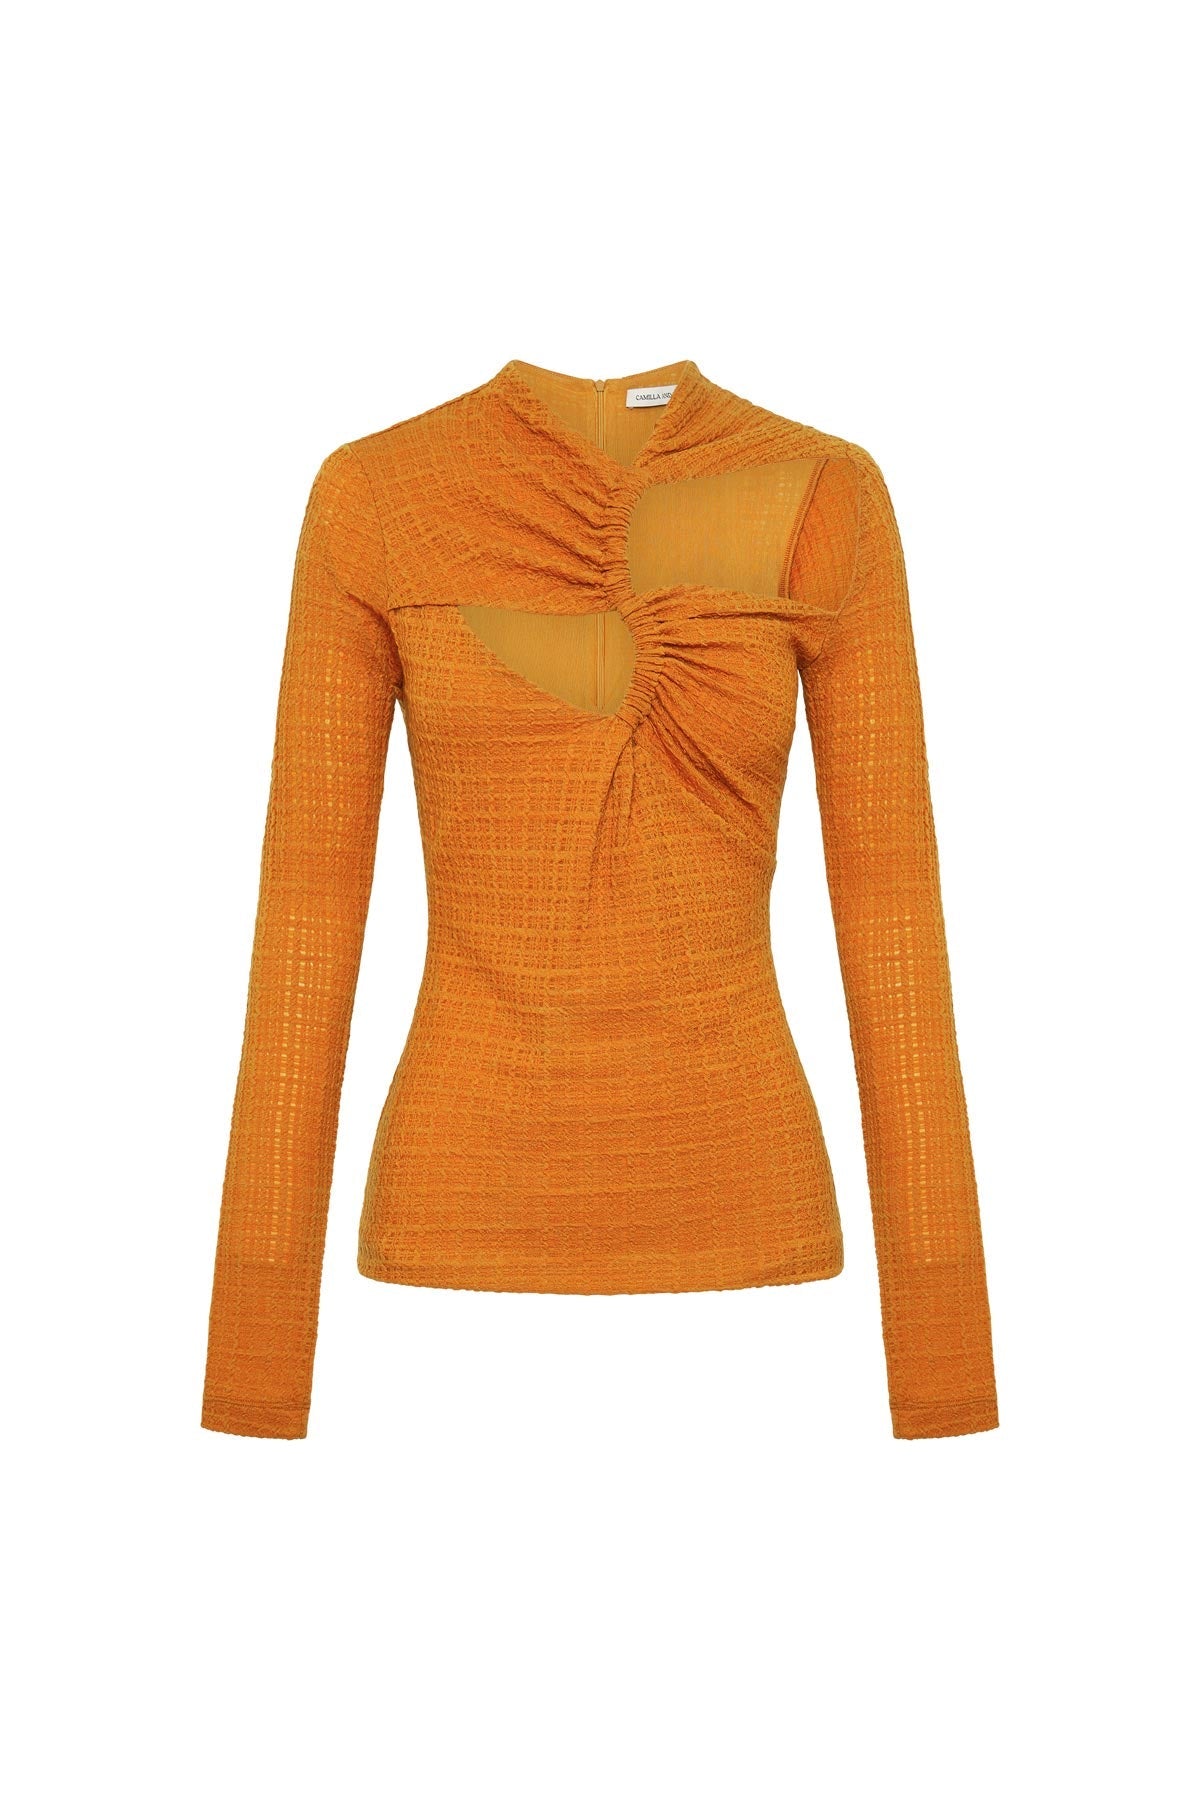 Nemesia Long Sleeve Top - Burnt Orange